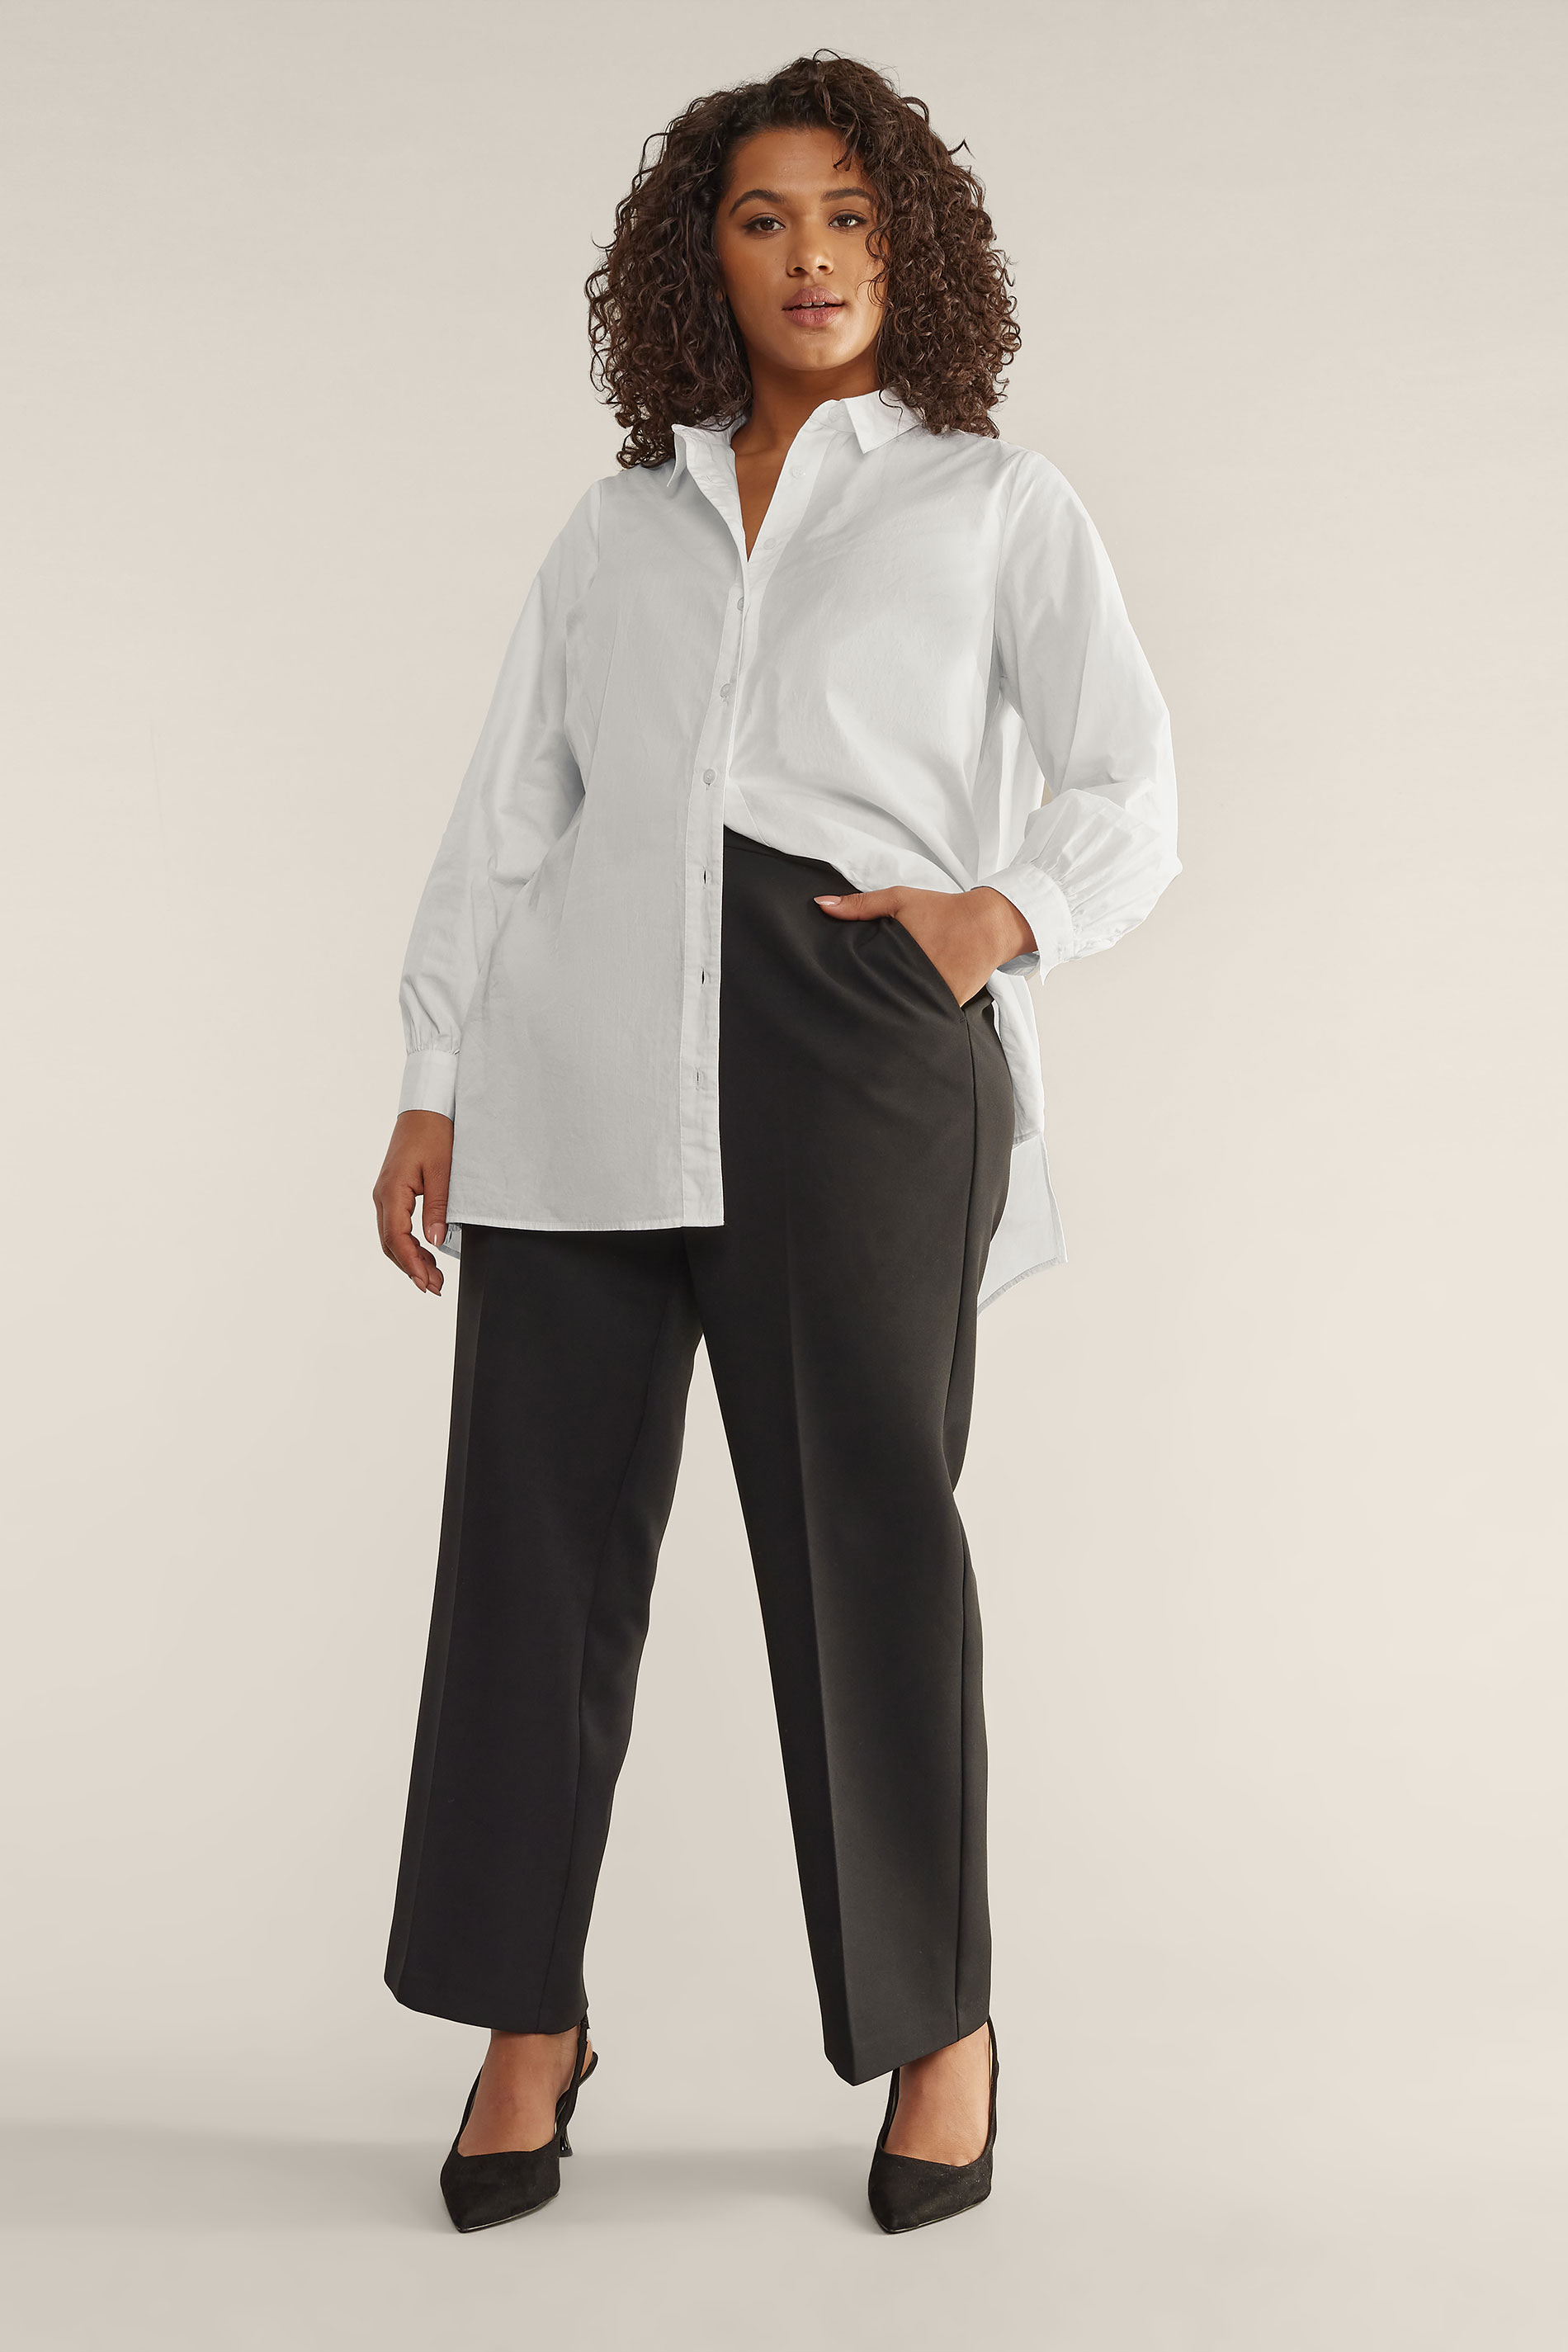 EVANS Plus Size White Poplin Shirt | Evans 3